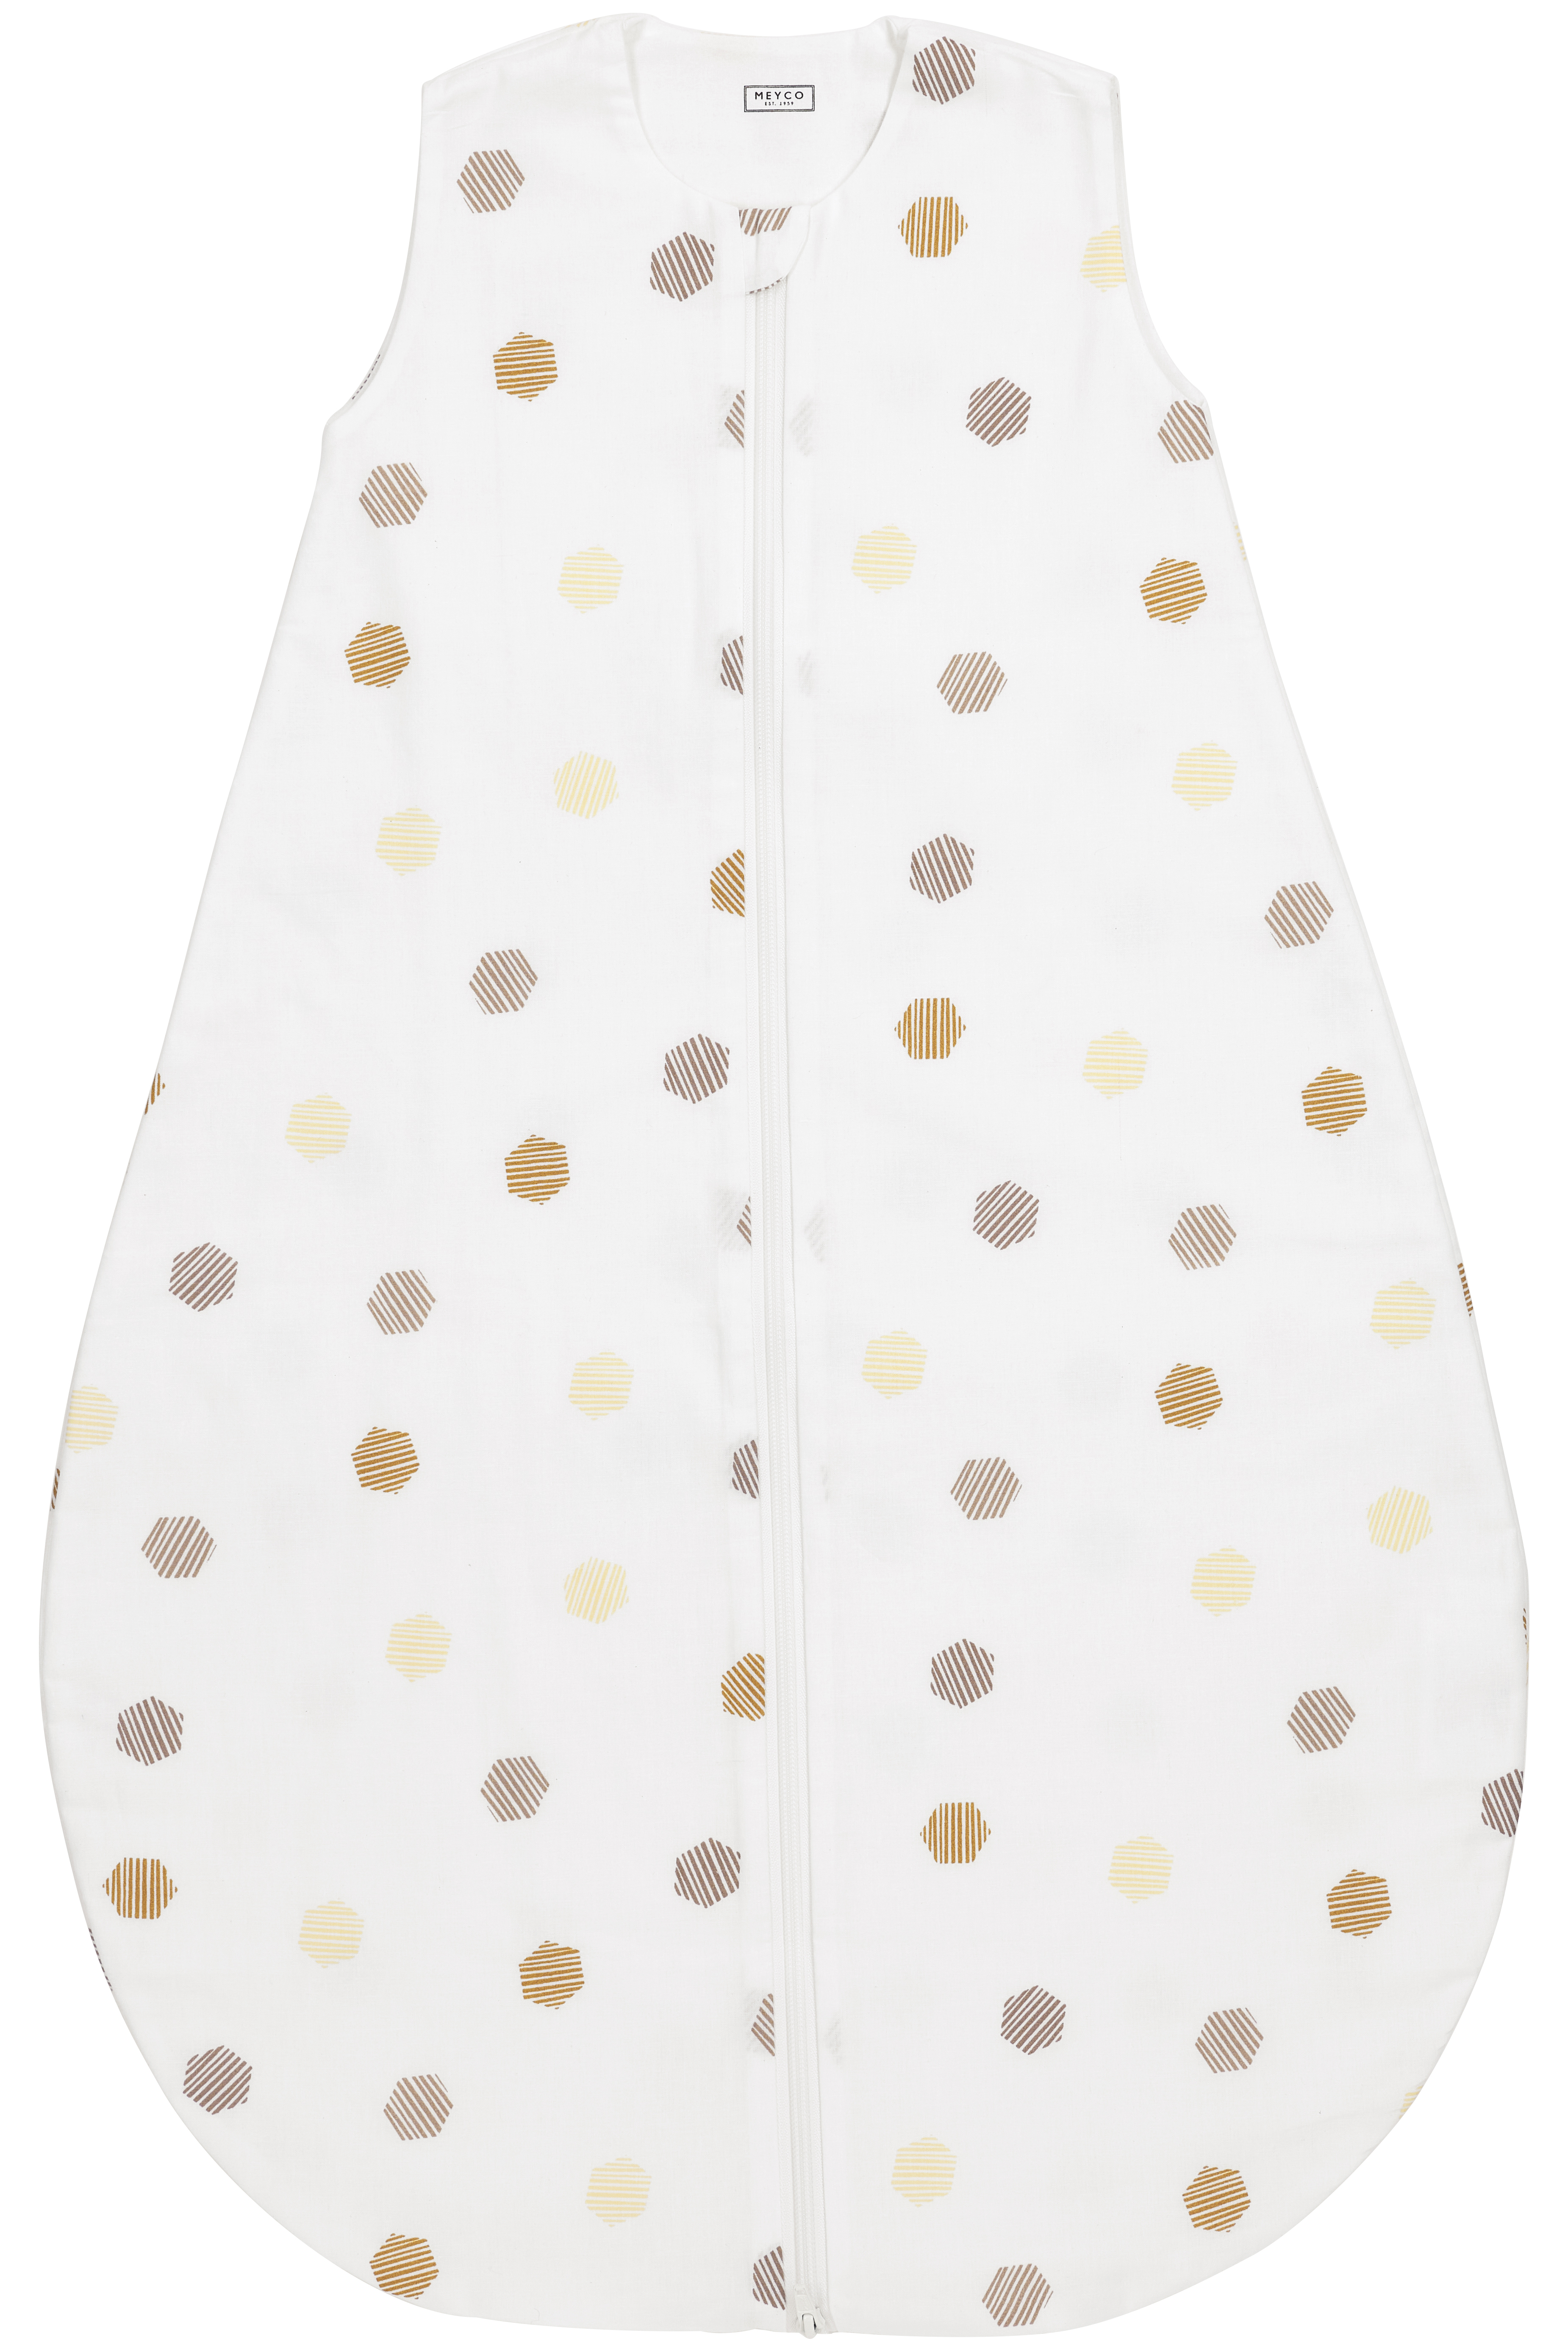 Baby sleeping bag Honeycomb round - Honey Gold - 70cm